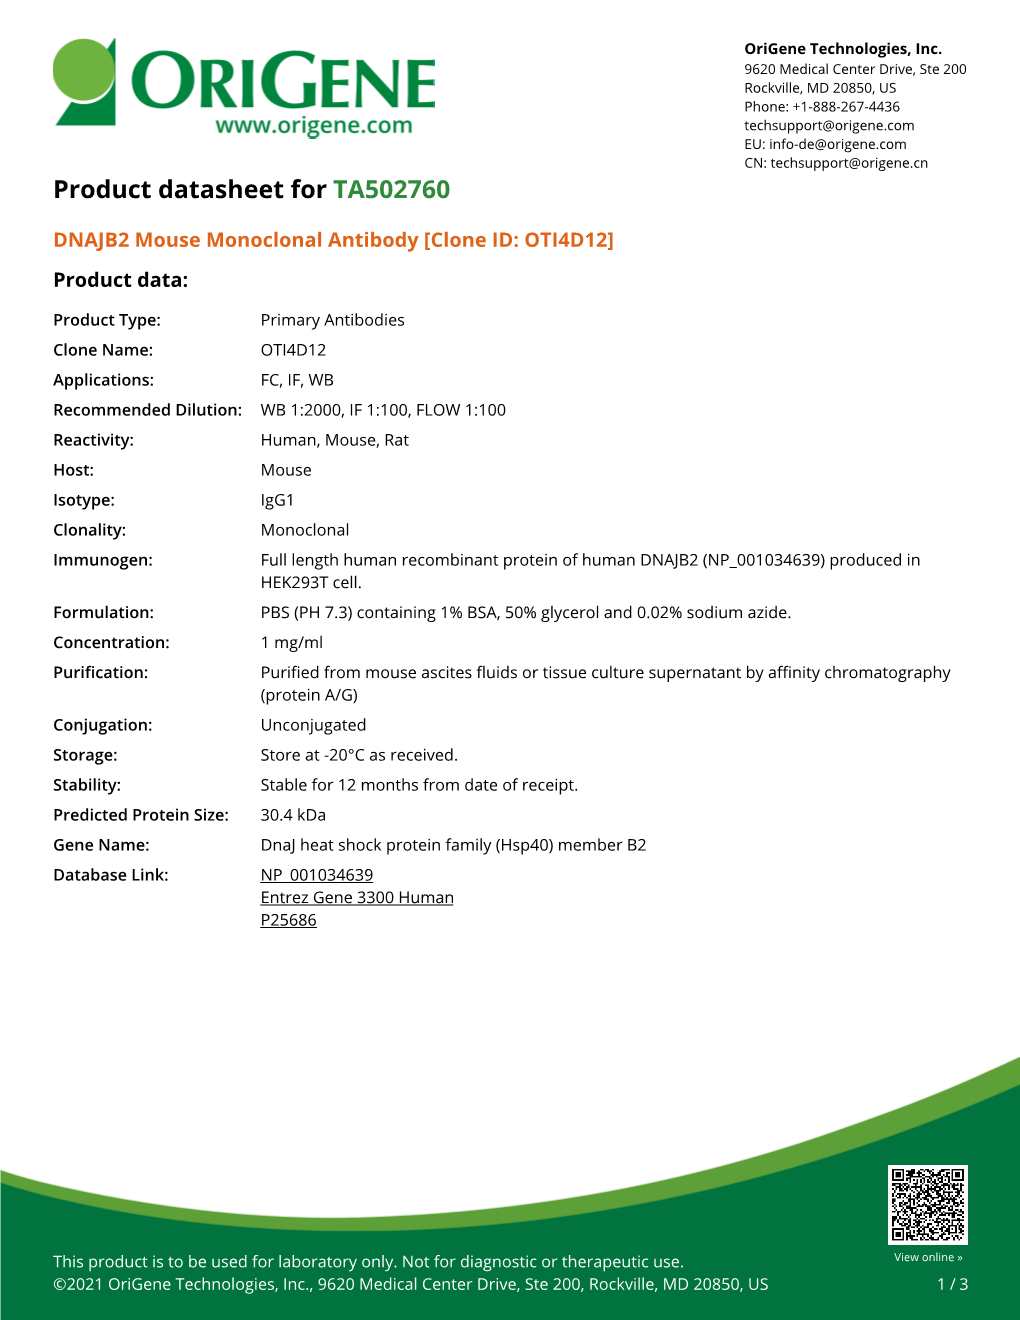 DNAJB2 Mouse Monoclonal Antibody [Clone ID: OTI4D12] Product Data